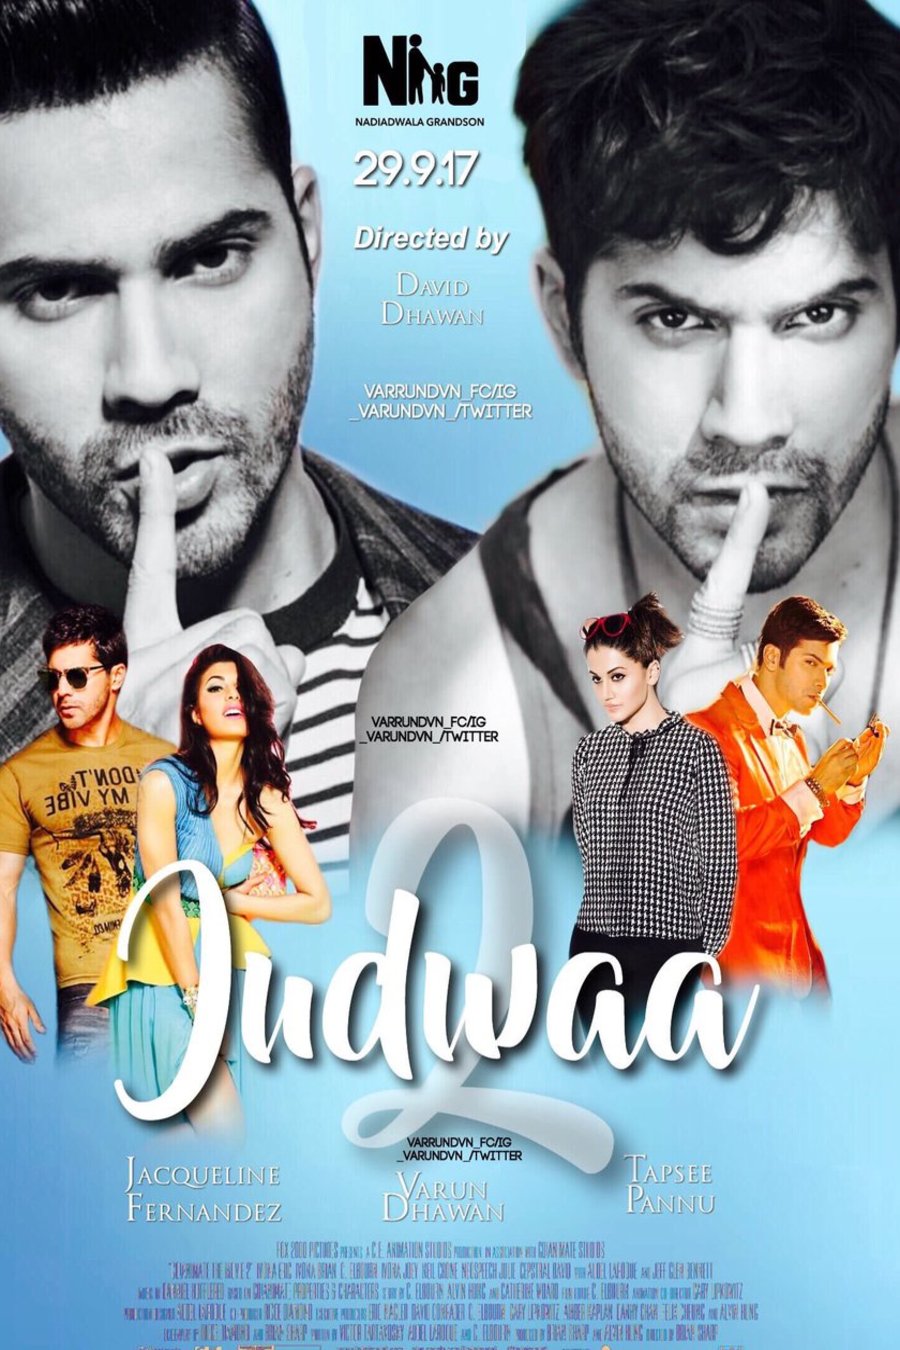 L'affiche originale du film Judwaa 2 en Hindi